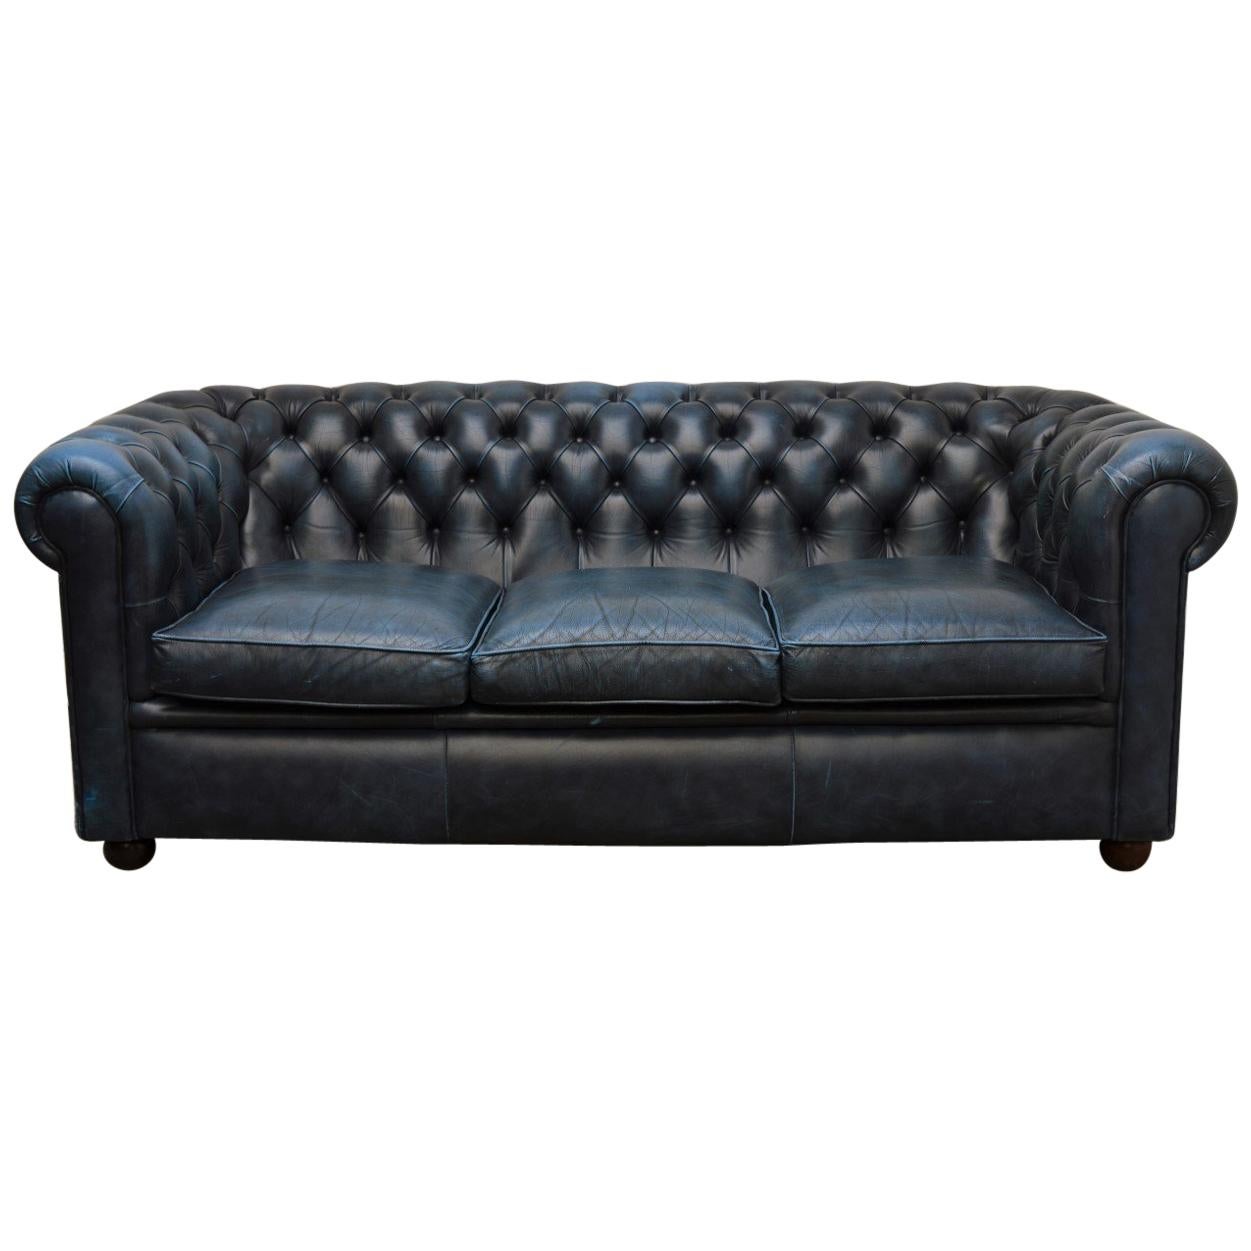 Antique Blue Chesterfield Sofa